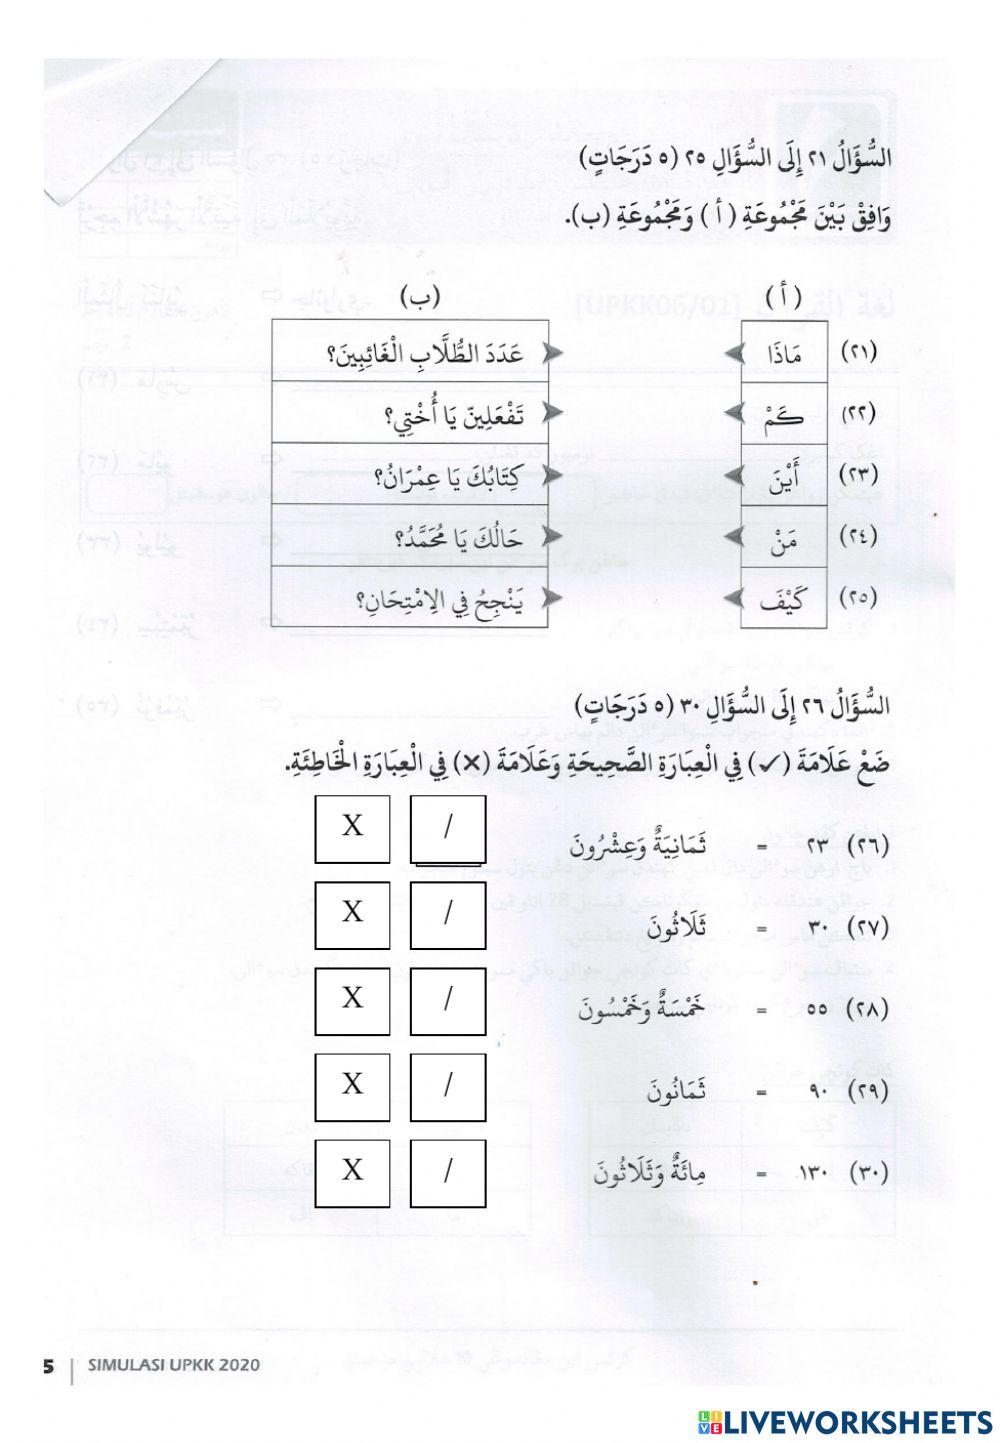 Latihan uji minda bahasa arab